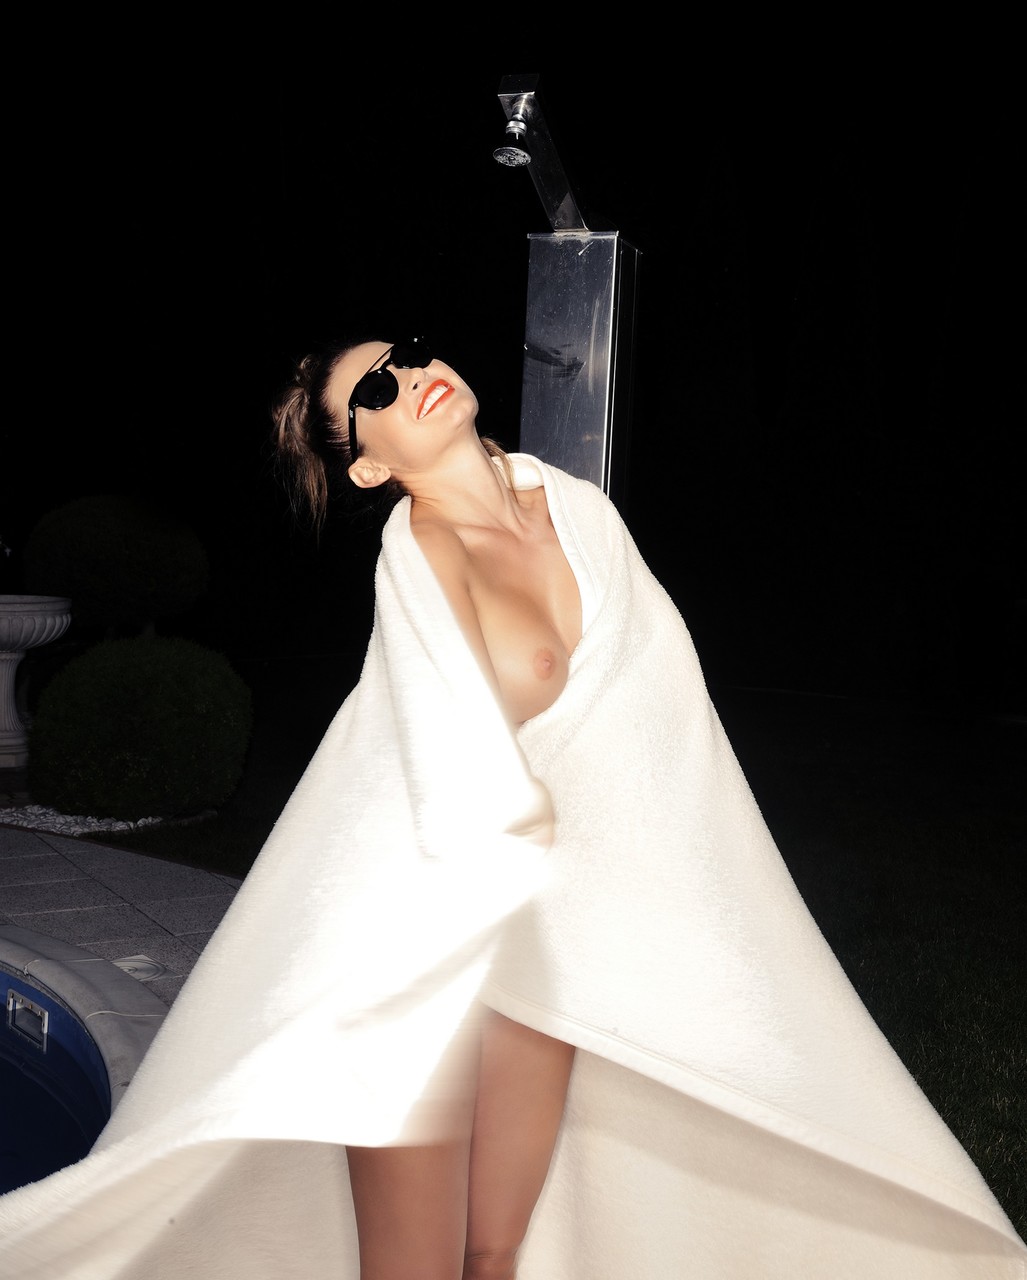 Hungarian stunning babe Mariana Pinter posing naked with sunglasses on 色情照片 #428438400 | Playboy Plus Pics, Mariana Pinter, Centerfold, 手机色情